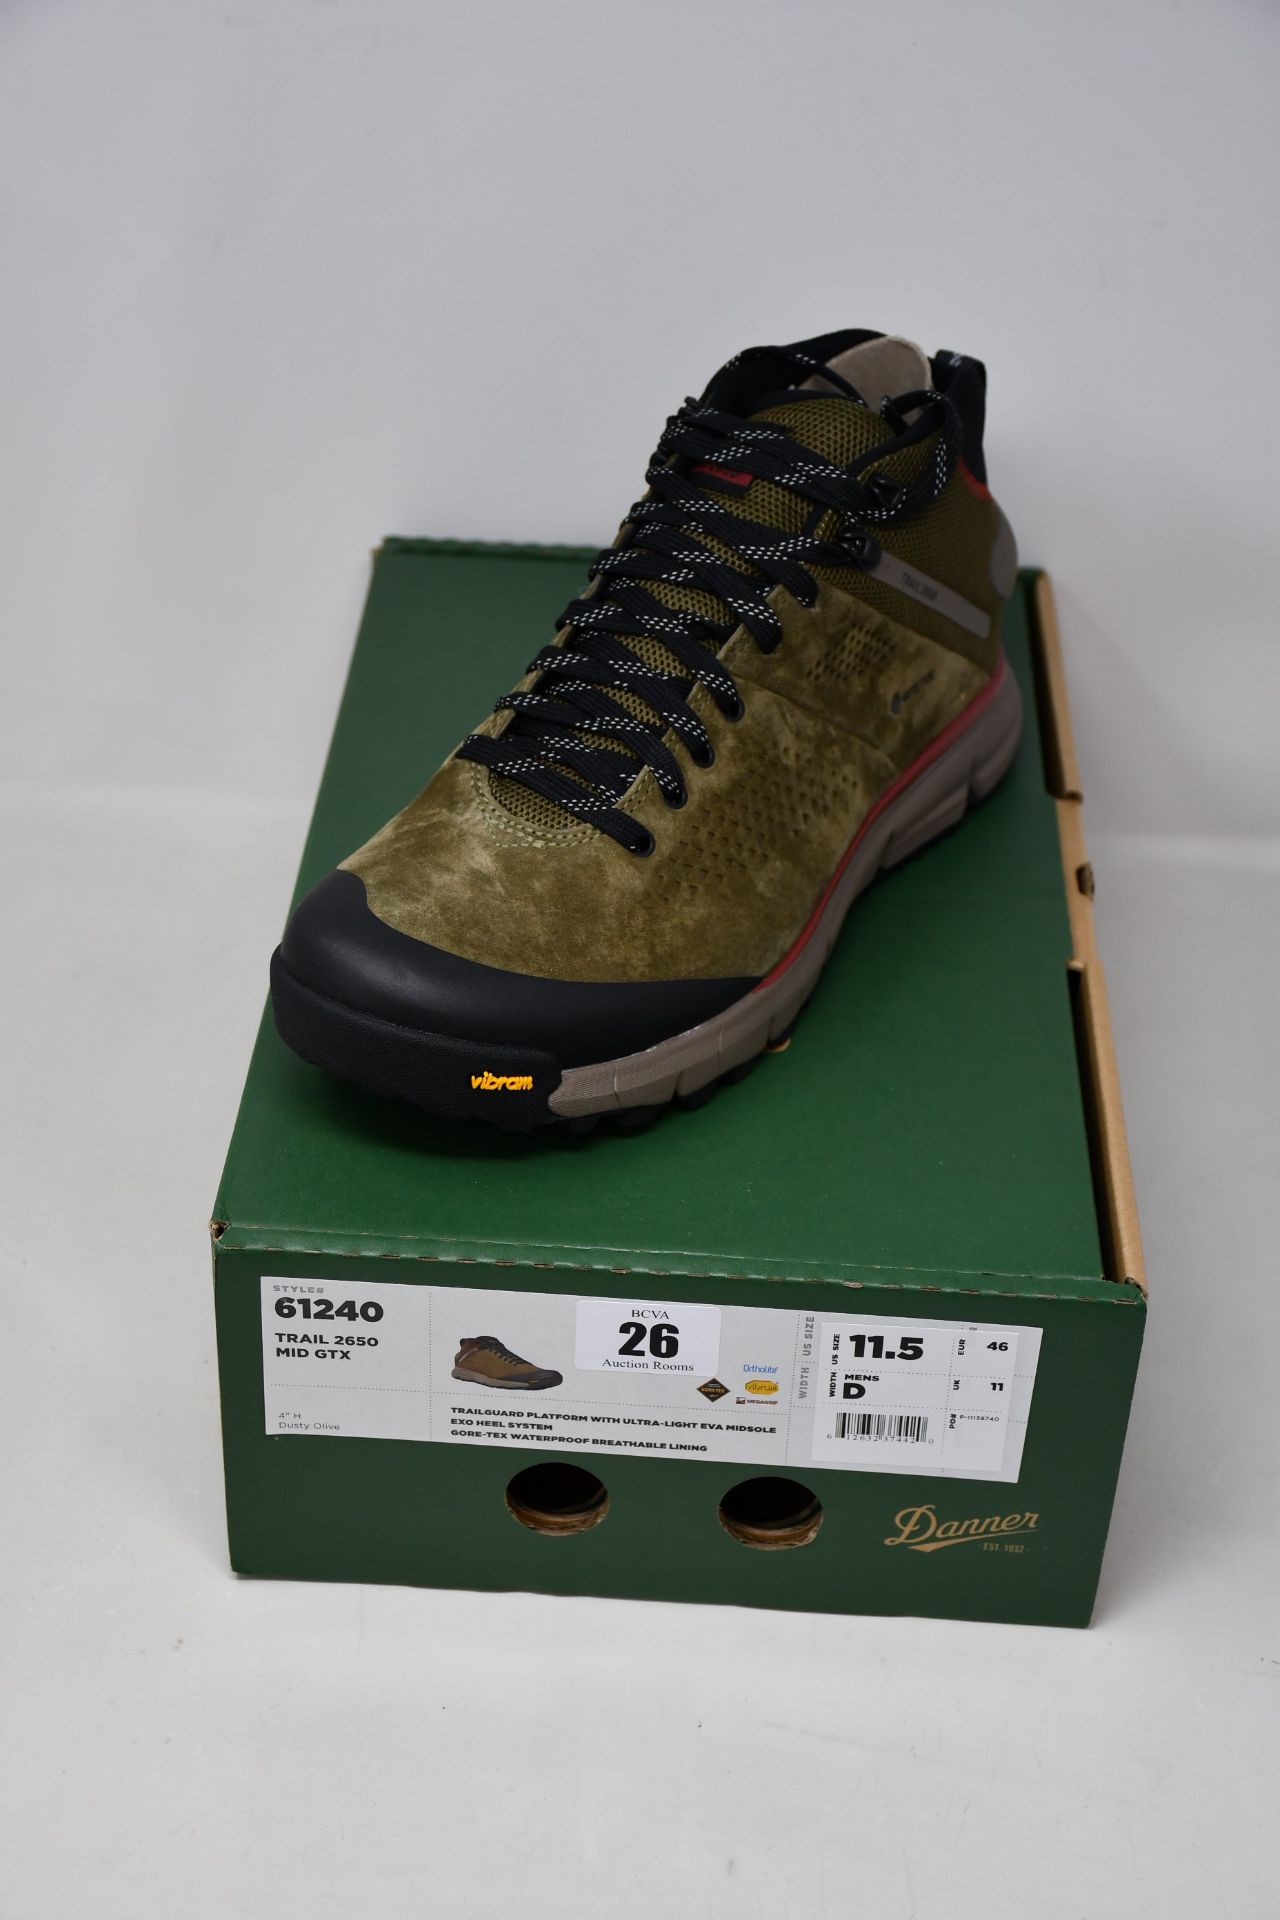 A pair of as new Danner Trail 2650 sneakers (UK 11 - RRP £140).